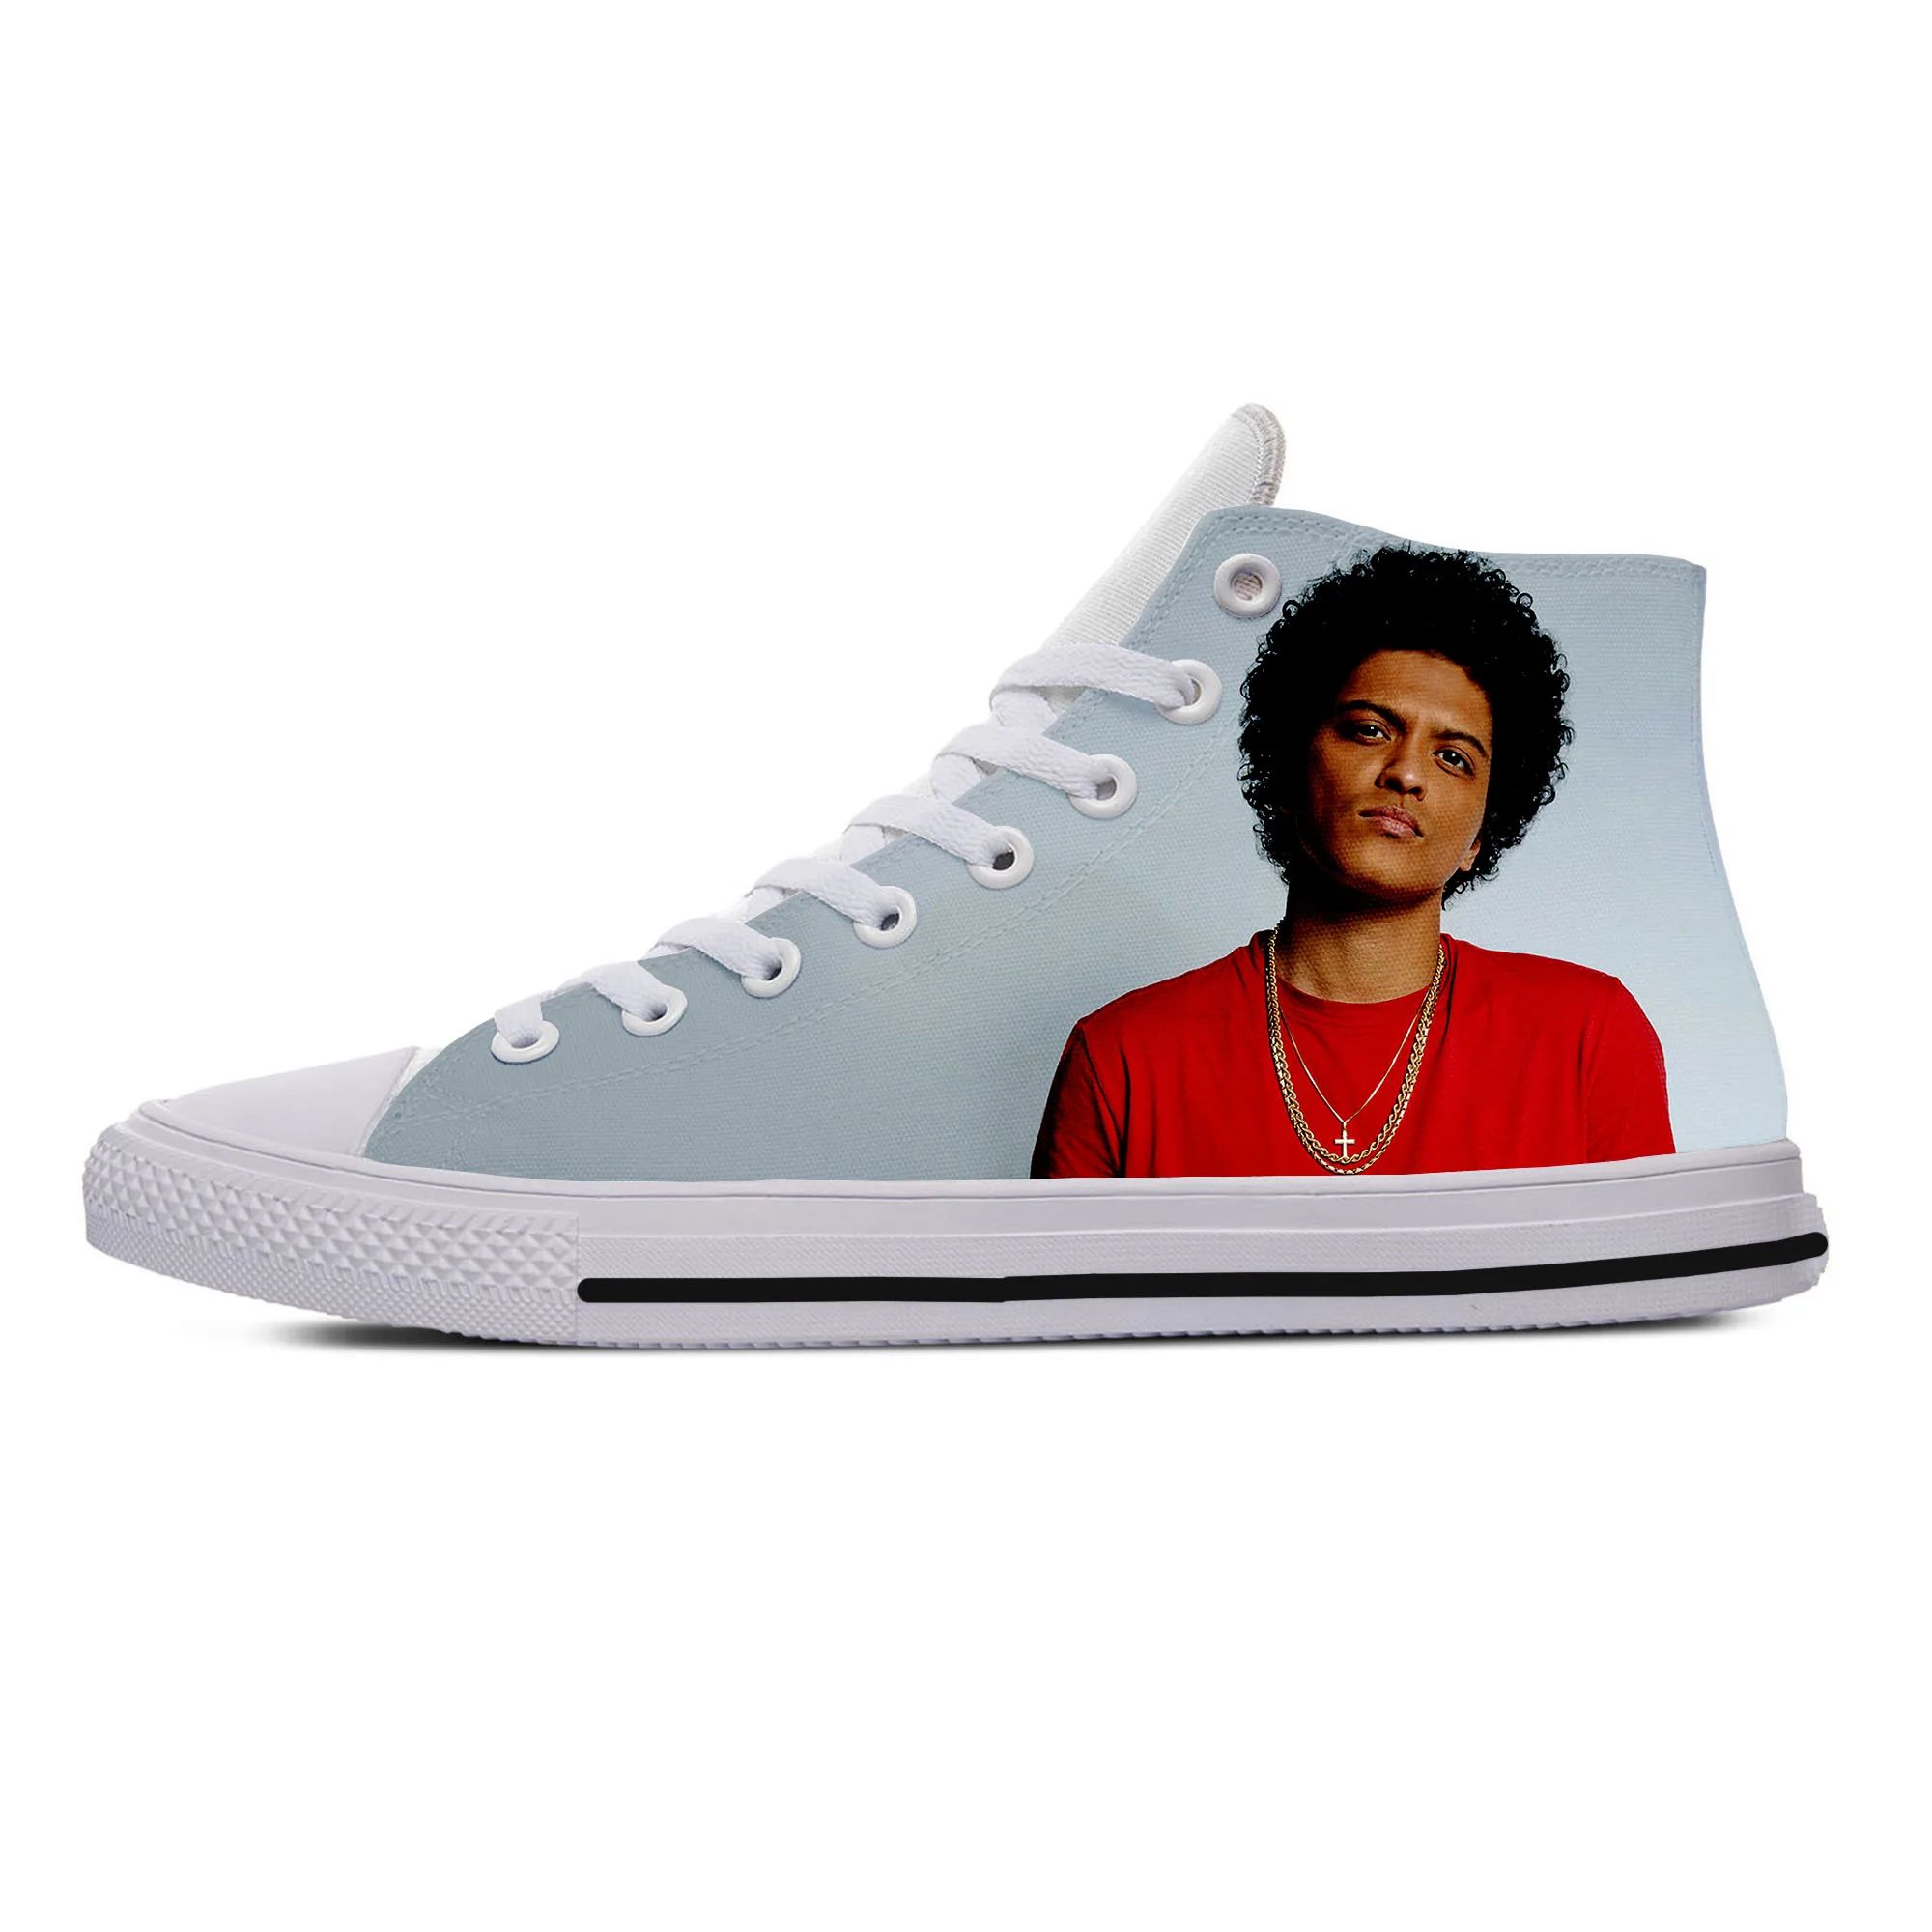 Kolor: Bruno Mars 1 Shoe Rozmiar: 9.5